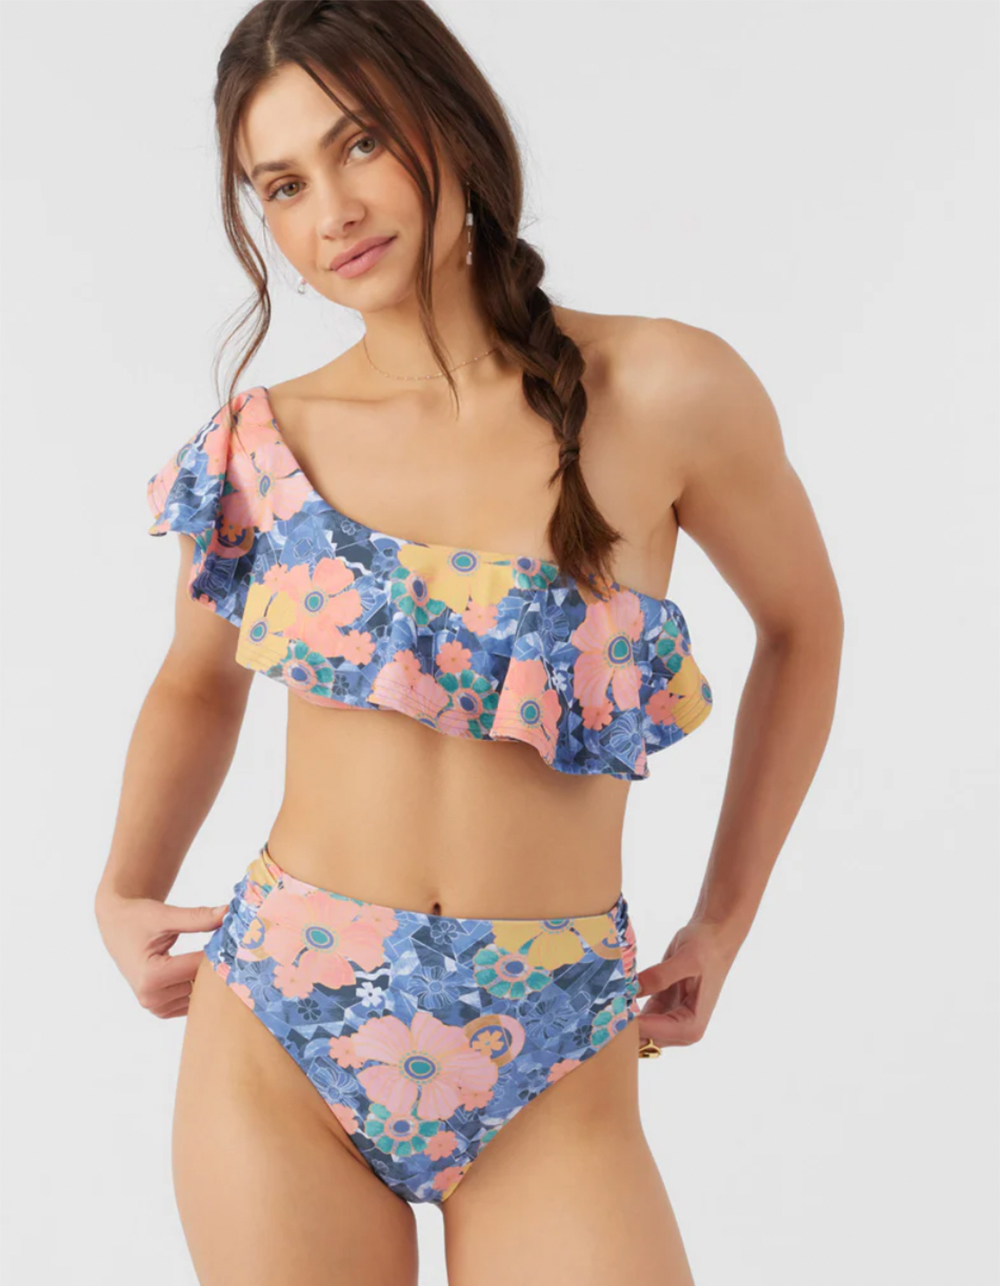 O'NEILL Jadia Floral Long Beach Womens High Waist Bikini Bottoms